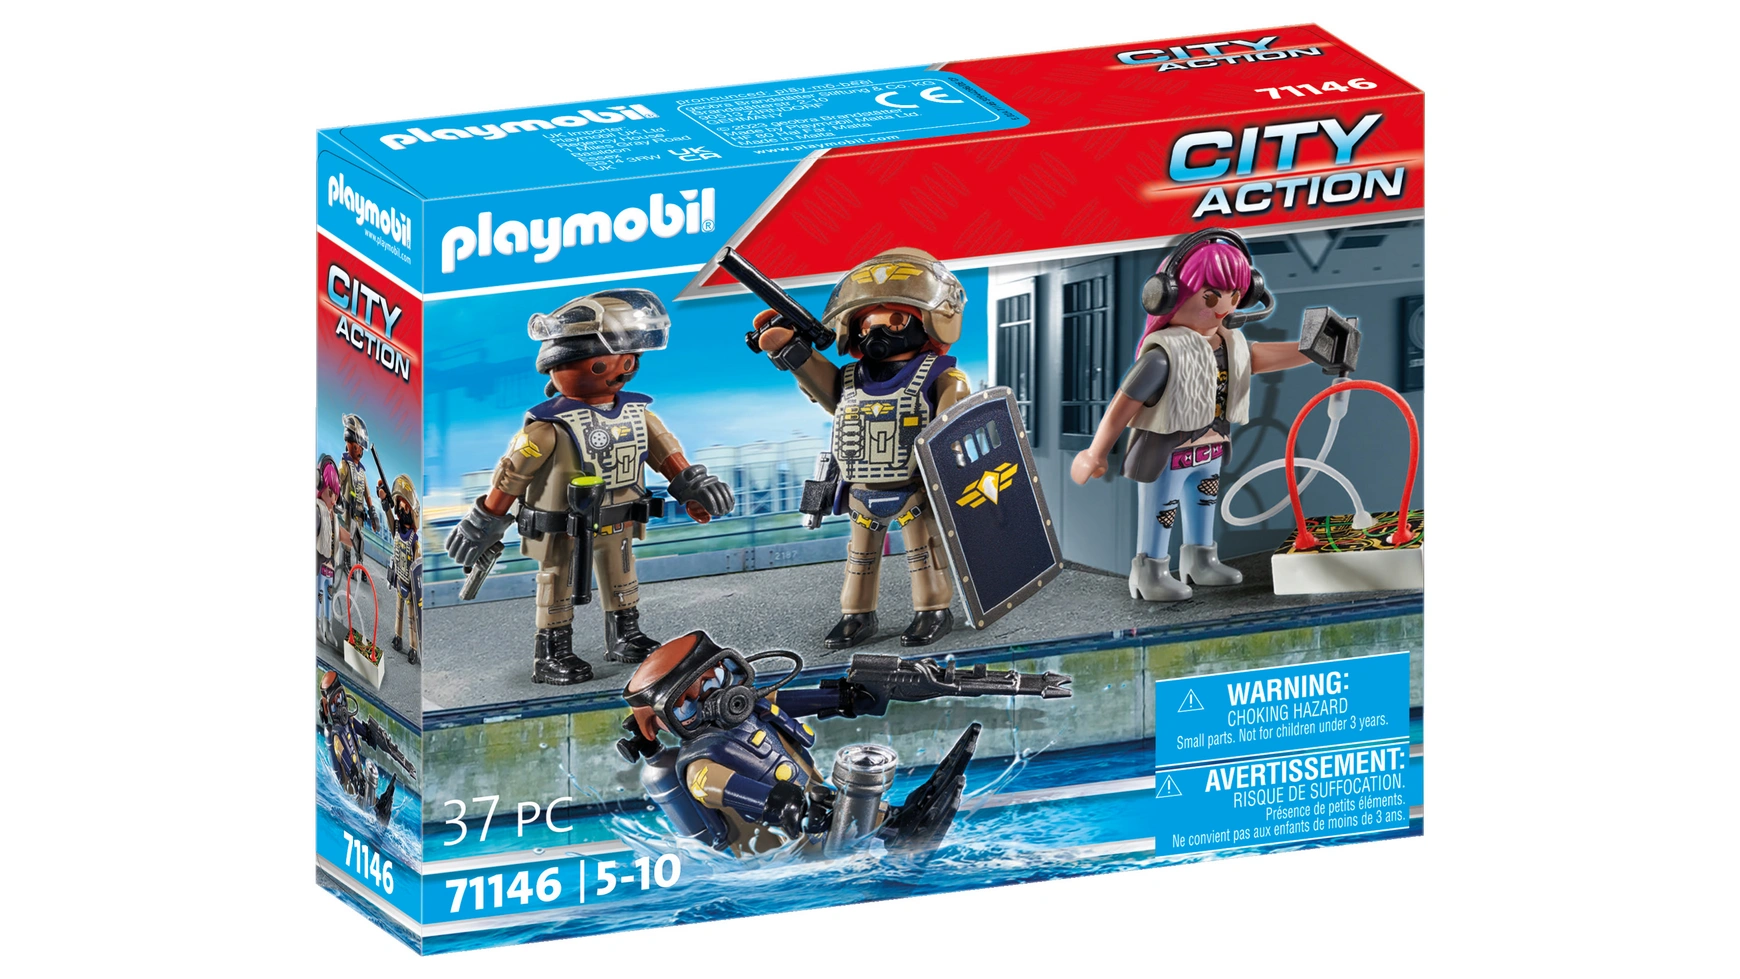 цена City action набор фигурок swat Playmobil